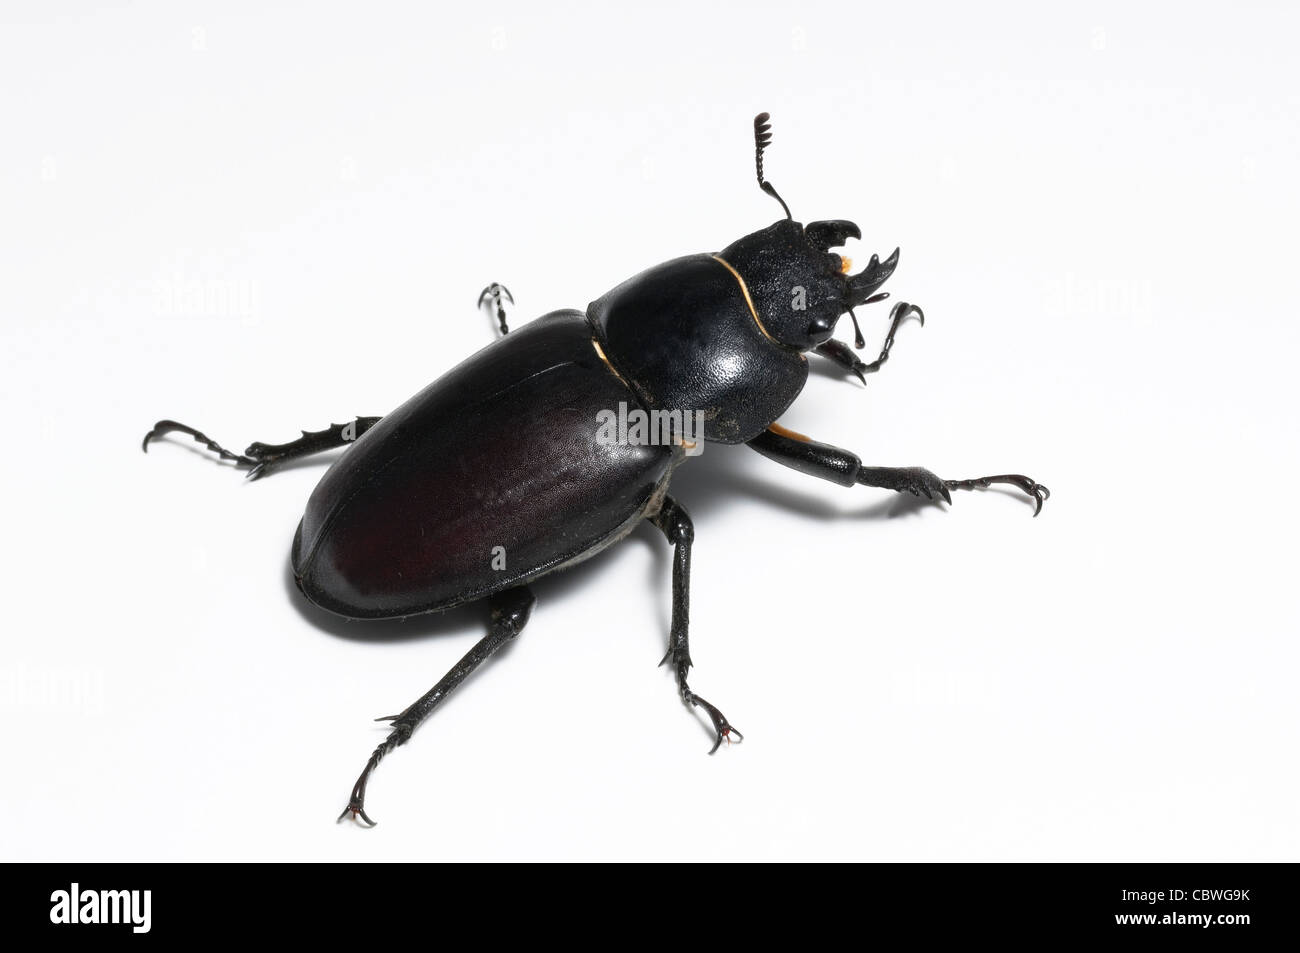 European Stag Beetle (Lucanus cervus), female, studio picture against a white background. Stock Photo